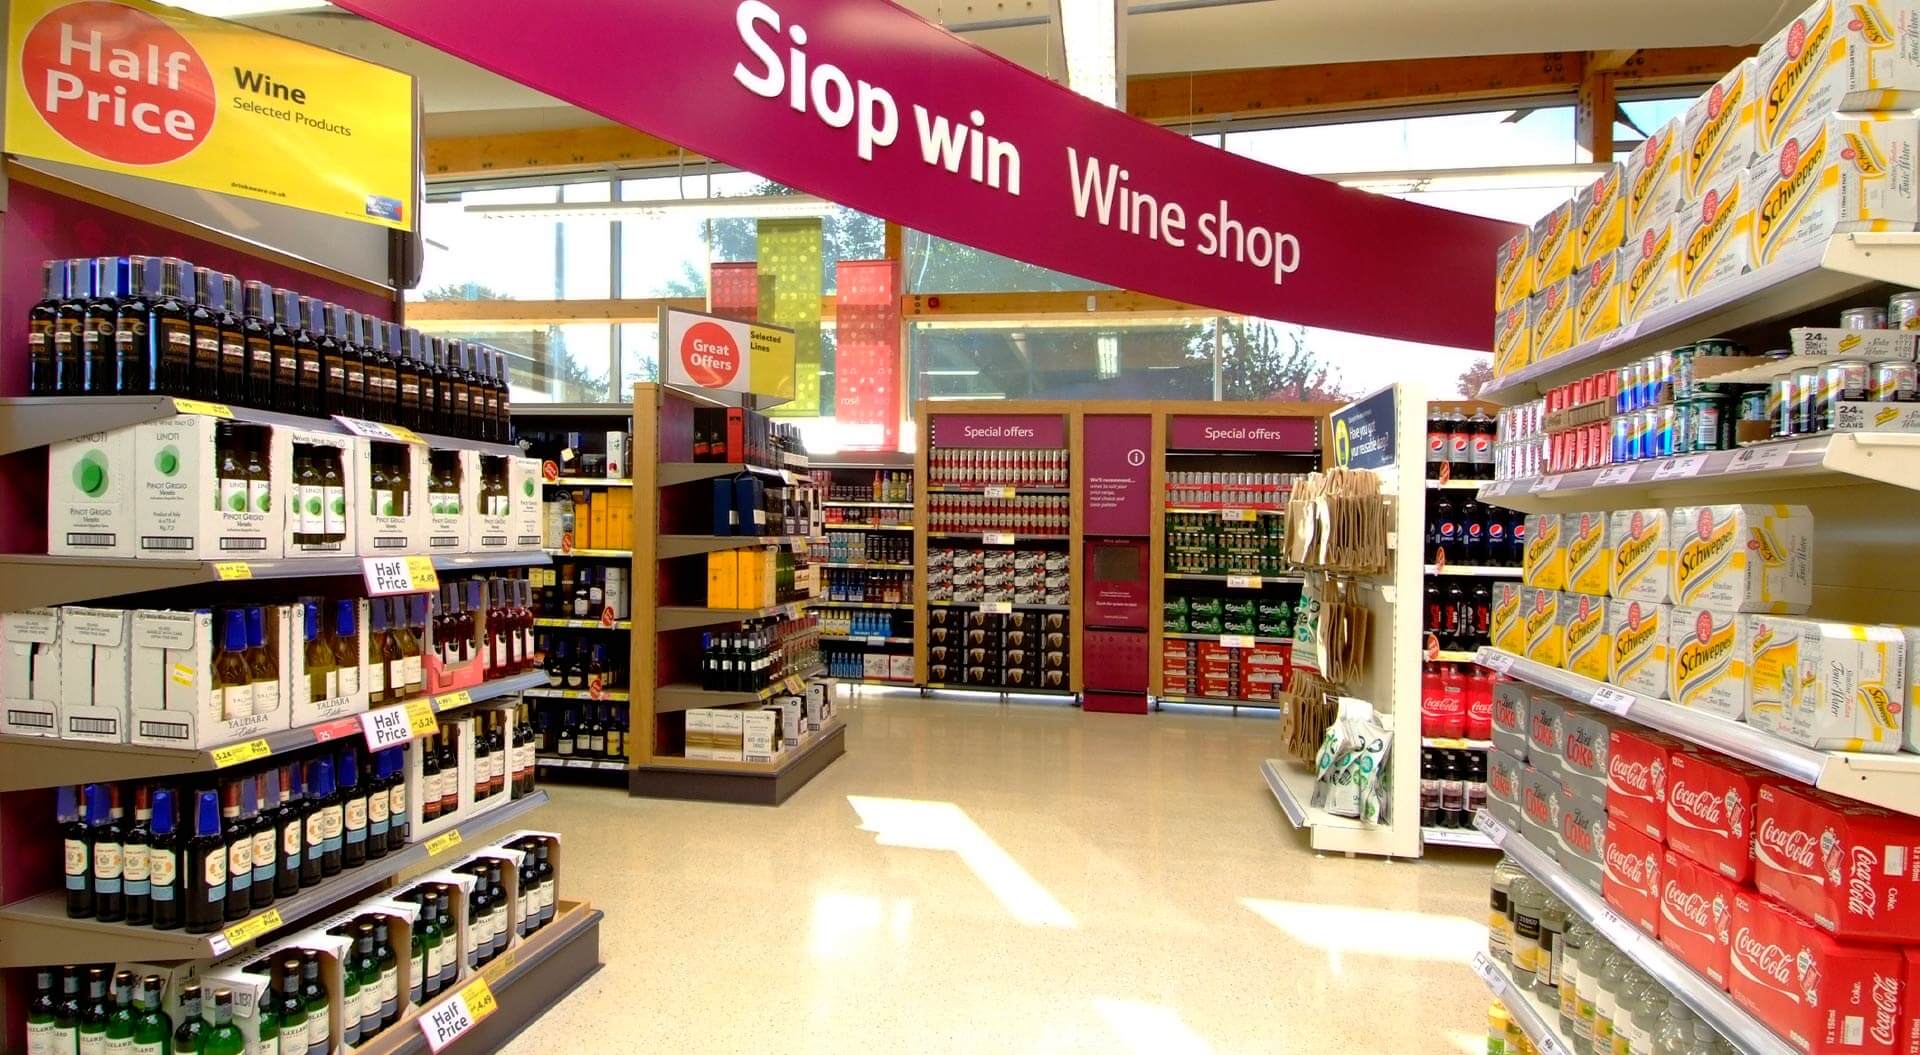 Tesco supermarket welshpool wine shop department design, merchandising system and brand communications 